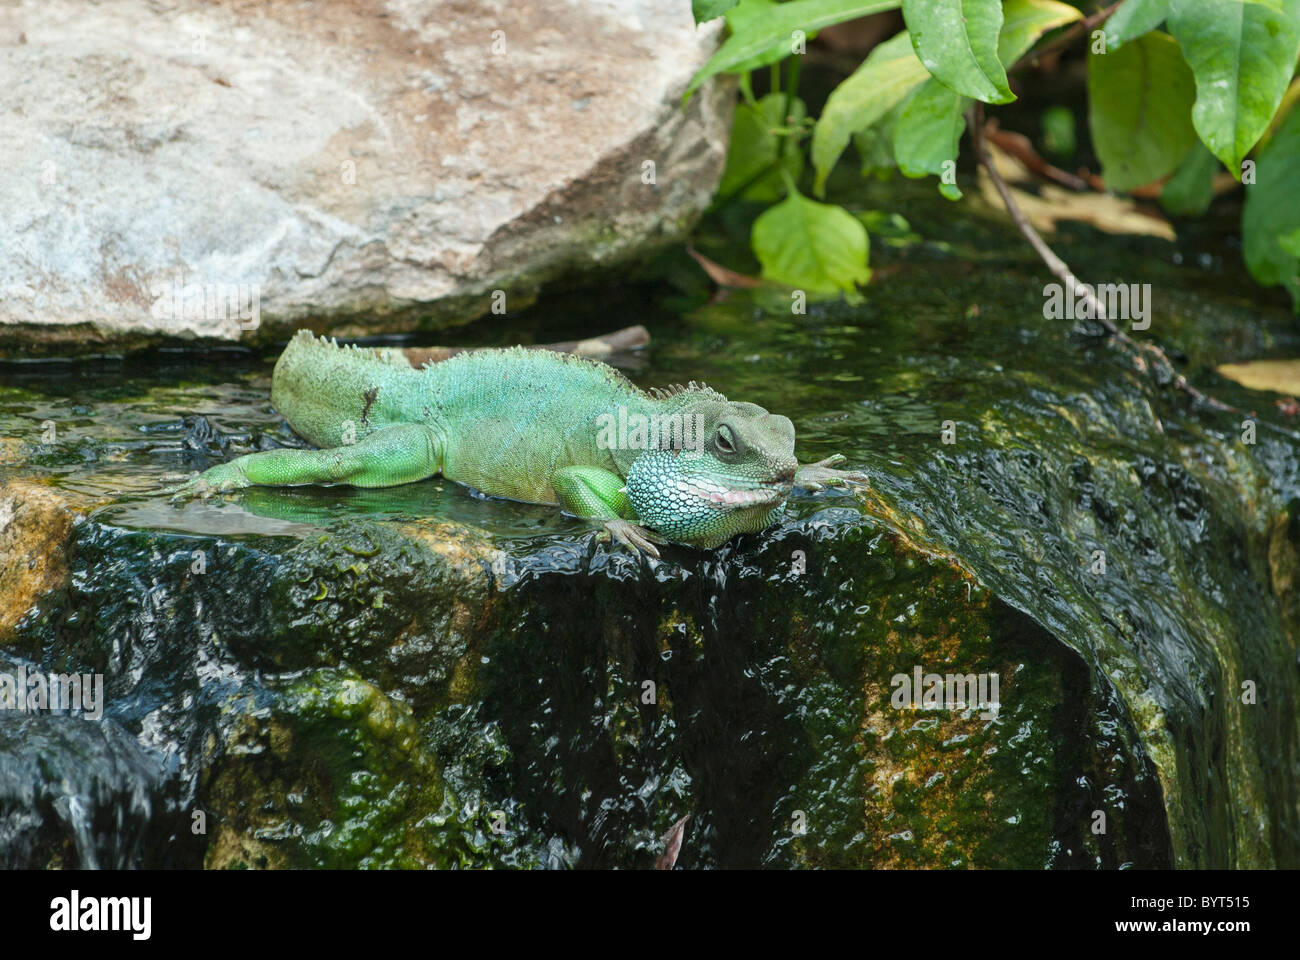 Chinesische Wasser Drachen Physignathus Cocincinus Botanical Gardens Kew, Bondon Uk. Echse Reptil Stockfoto